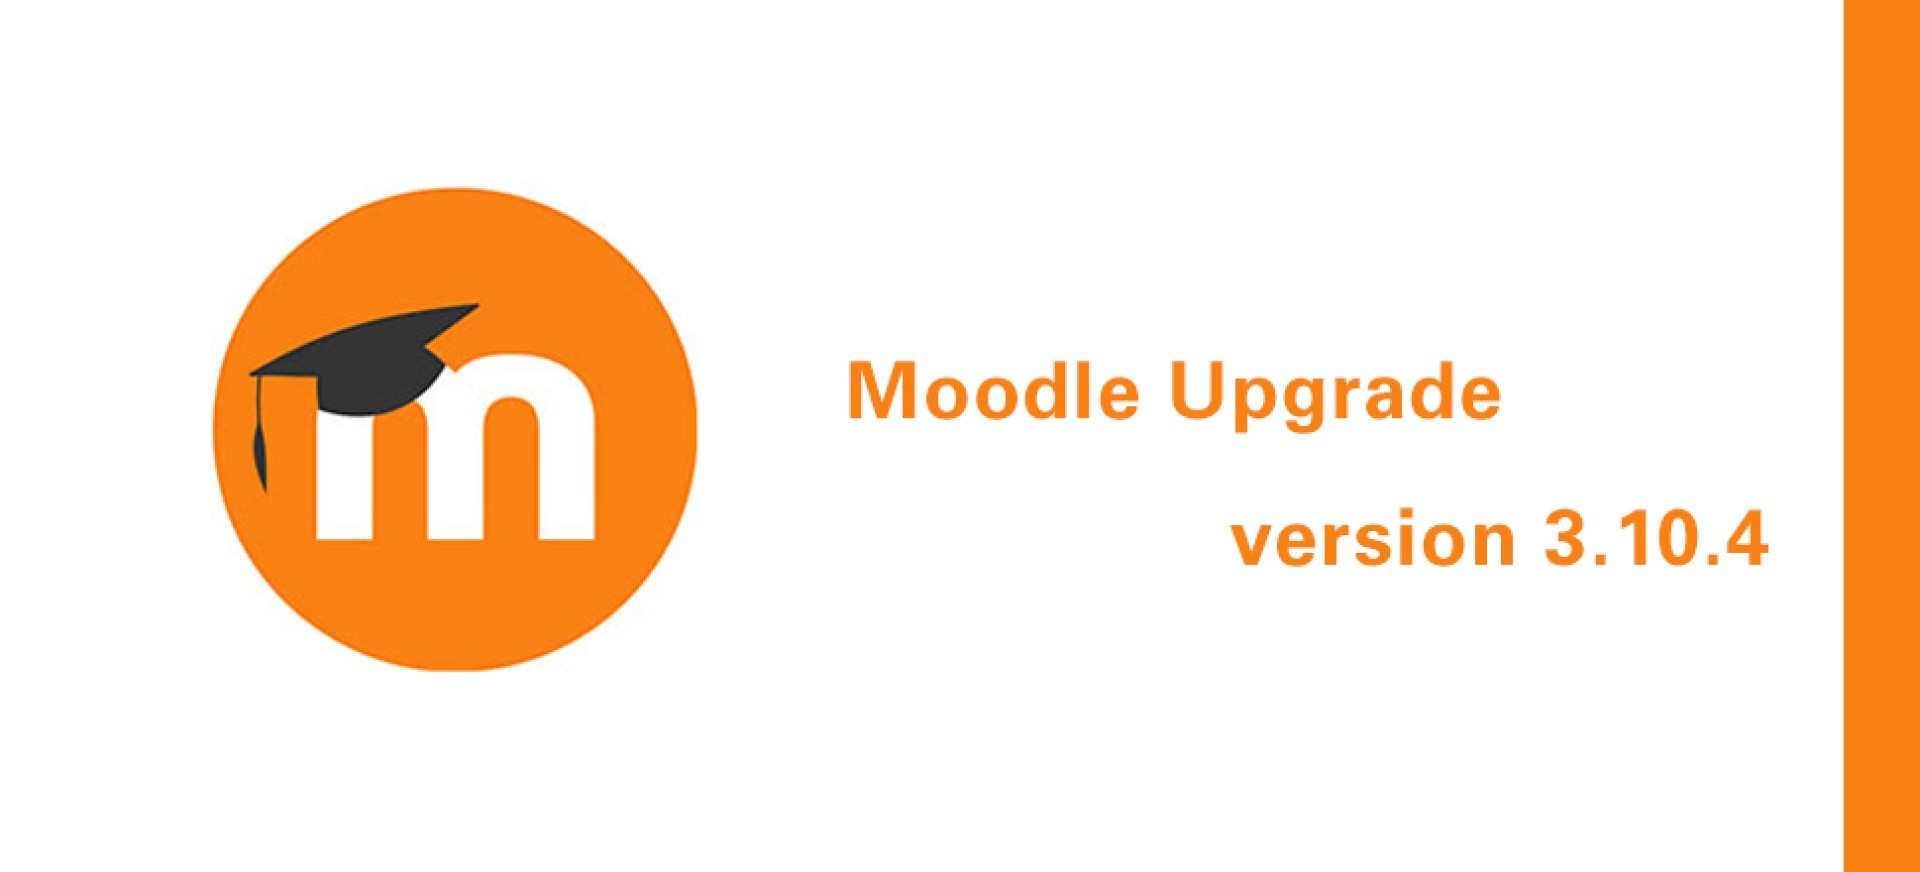 Moodle Upgrade